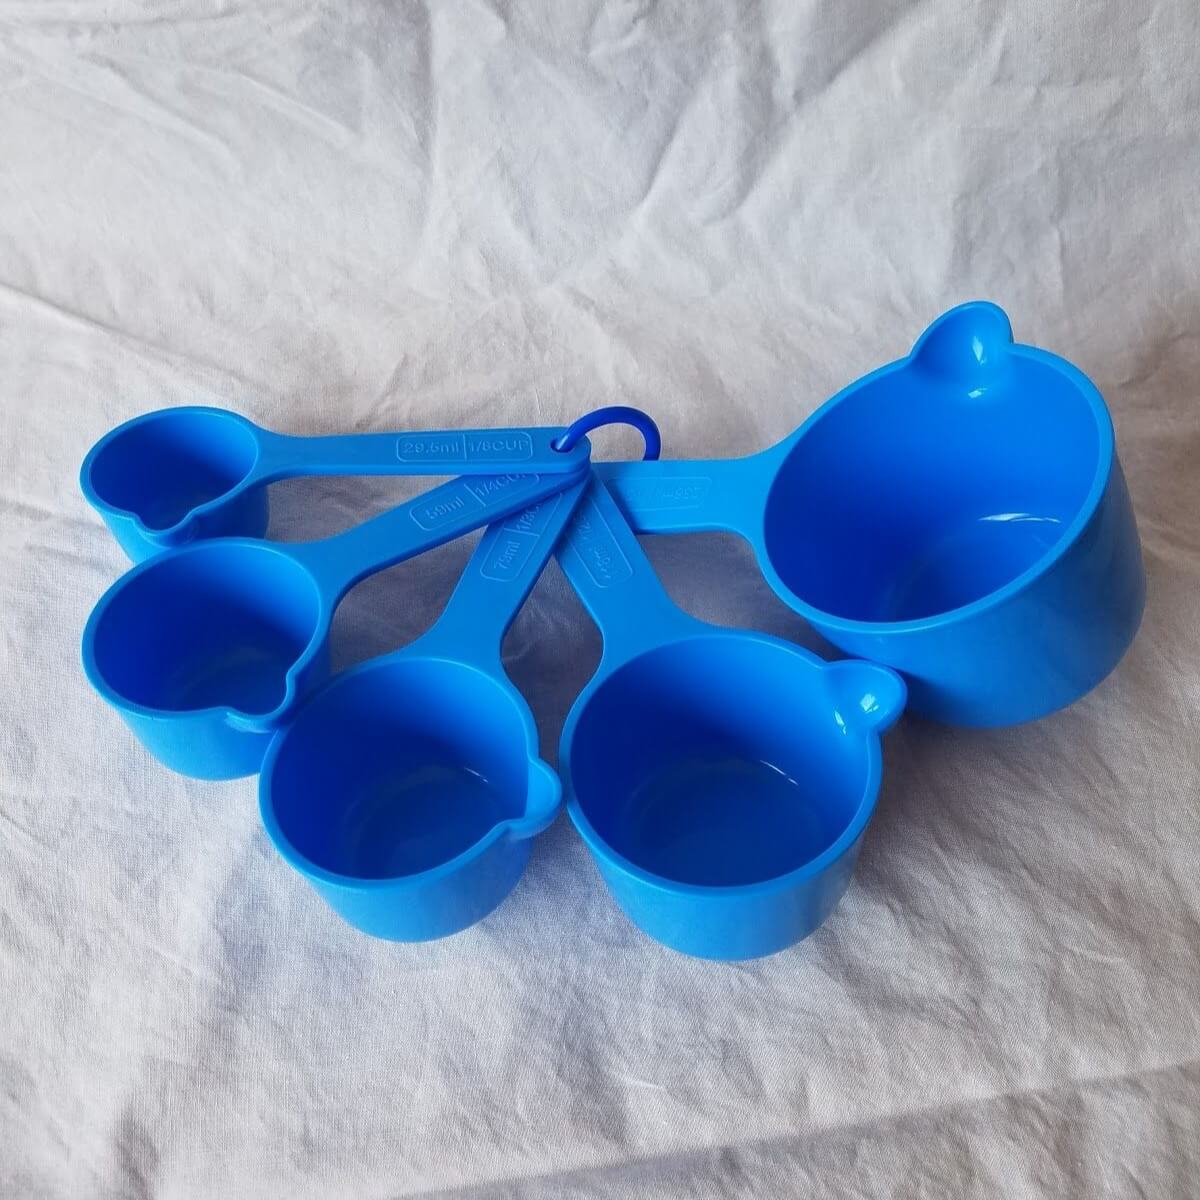 https://nlpamerica.com/wp-content/uploads/2018/09/measuring-cups-set-of-5.jpg